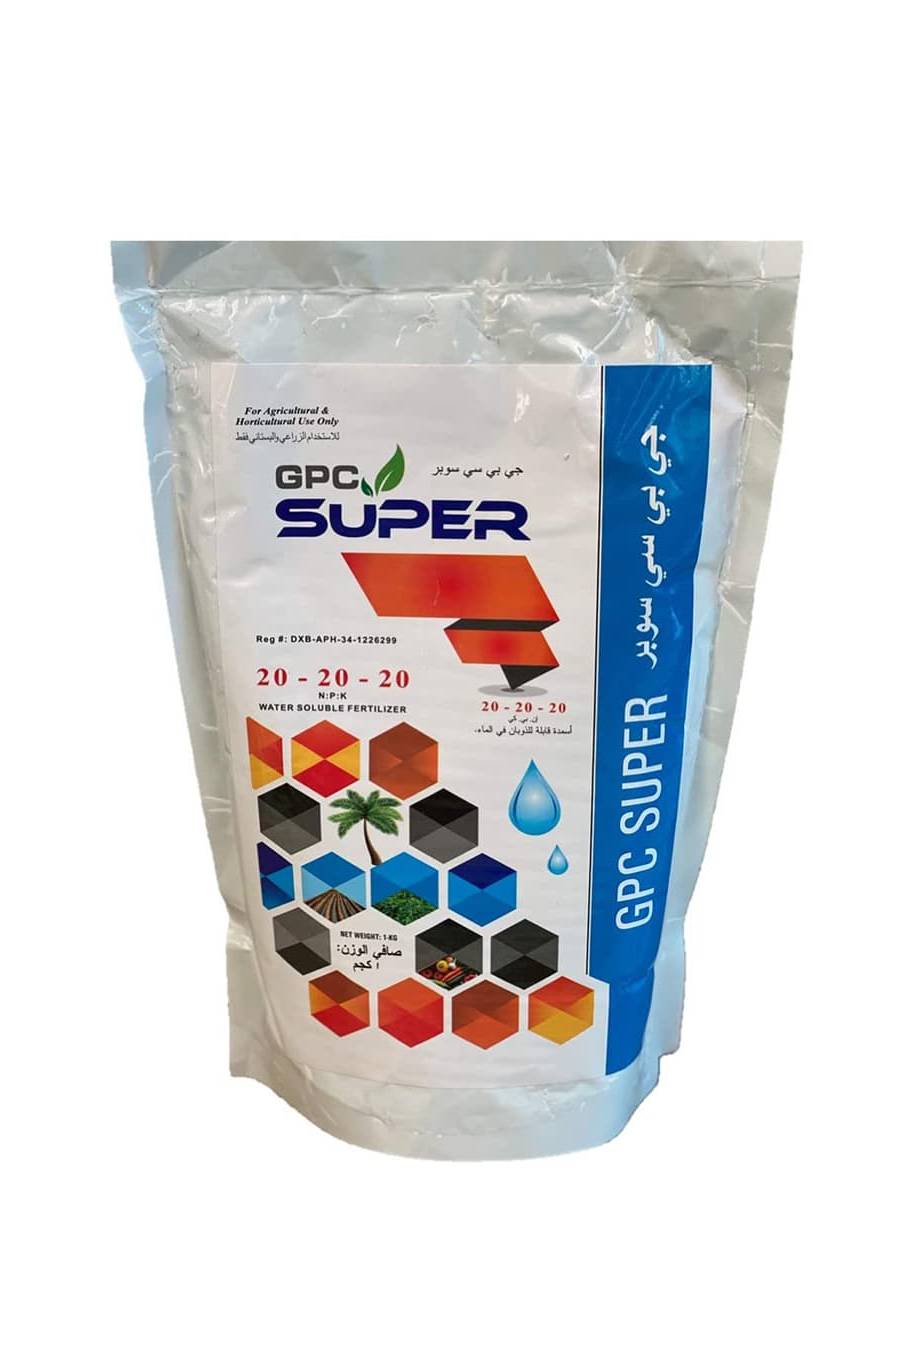 GPC Super NPK 20-20-20 Water Soluble Fertilizer